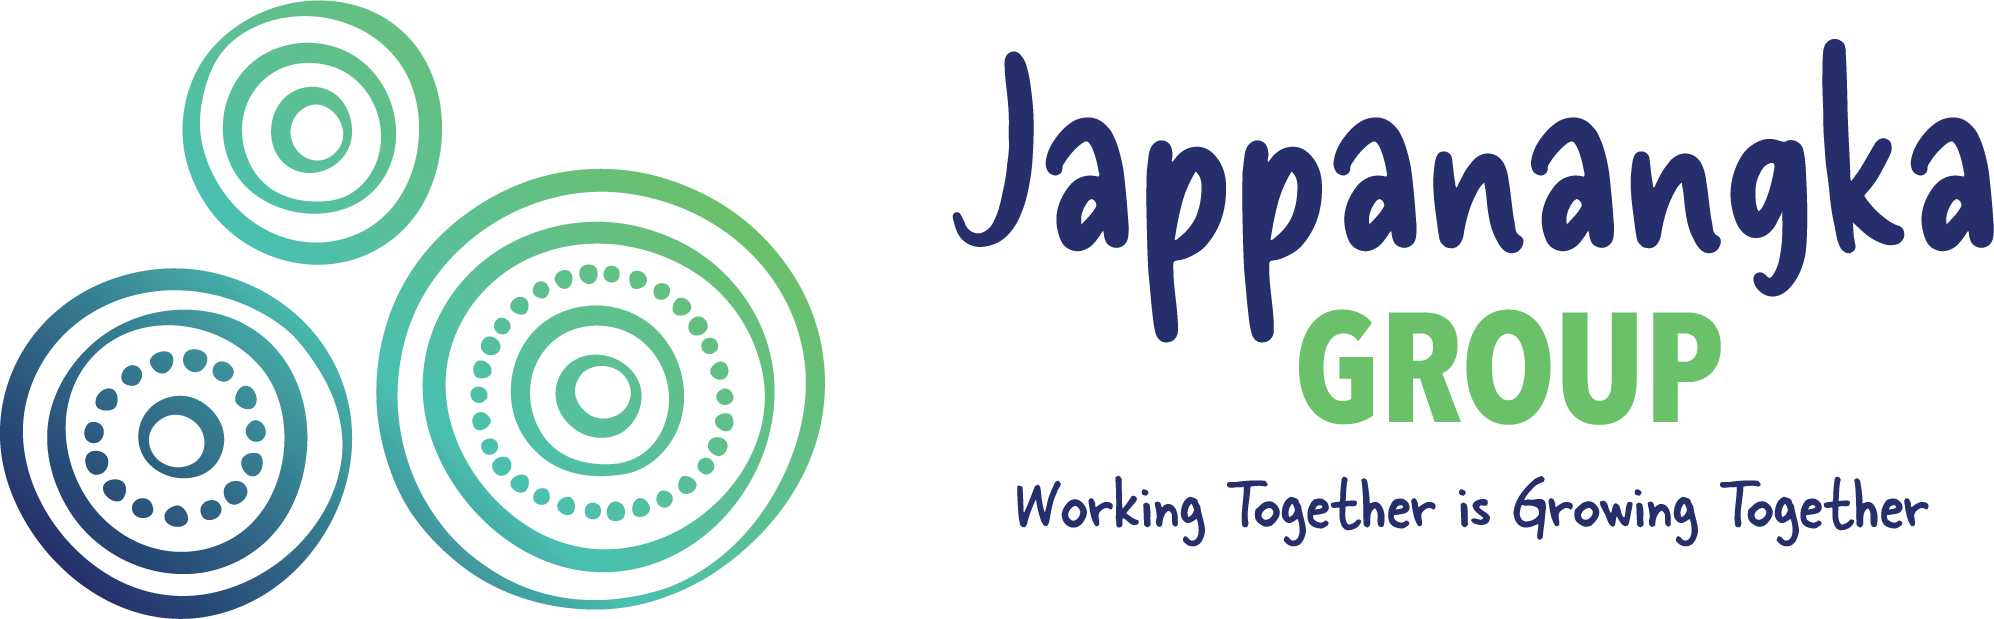 Jappanangka_Logo